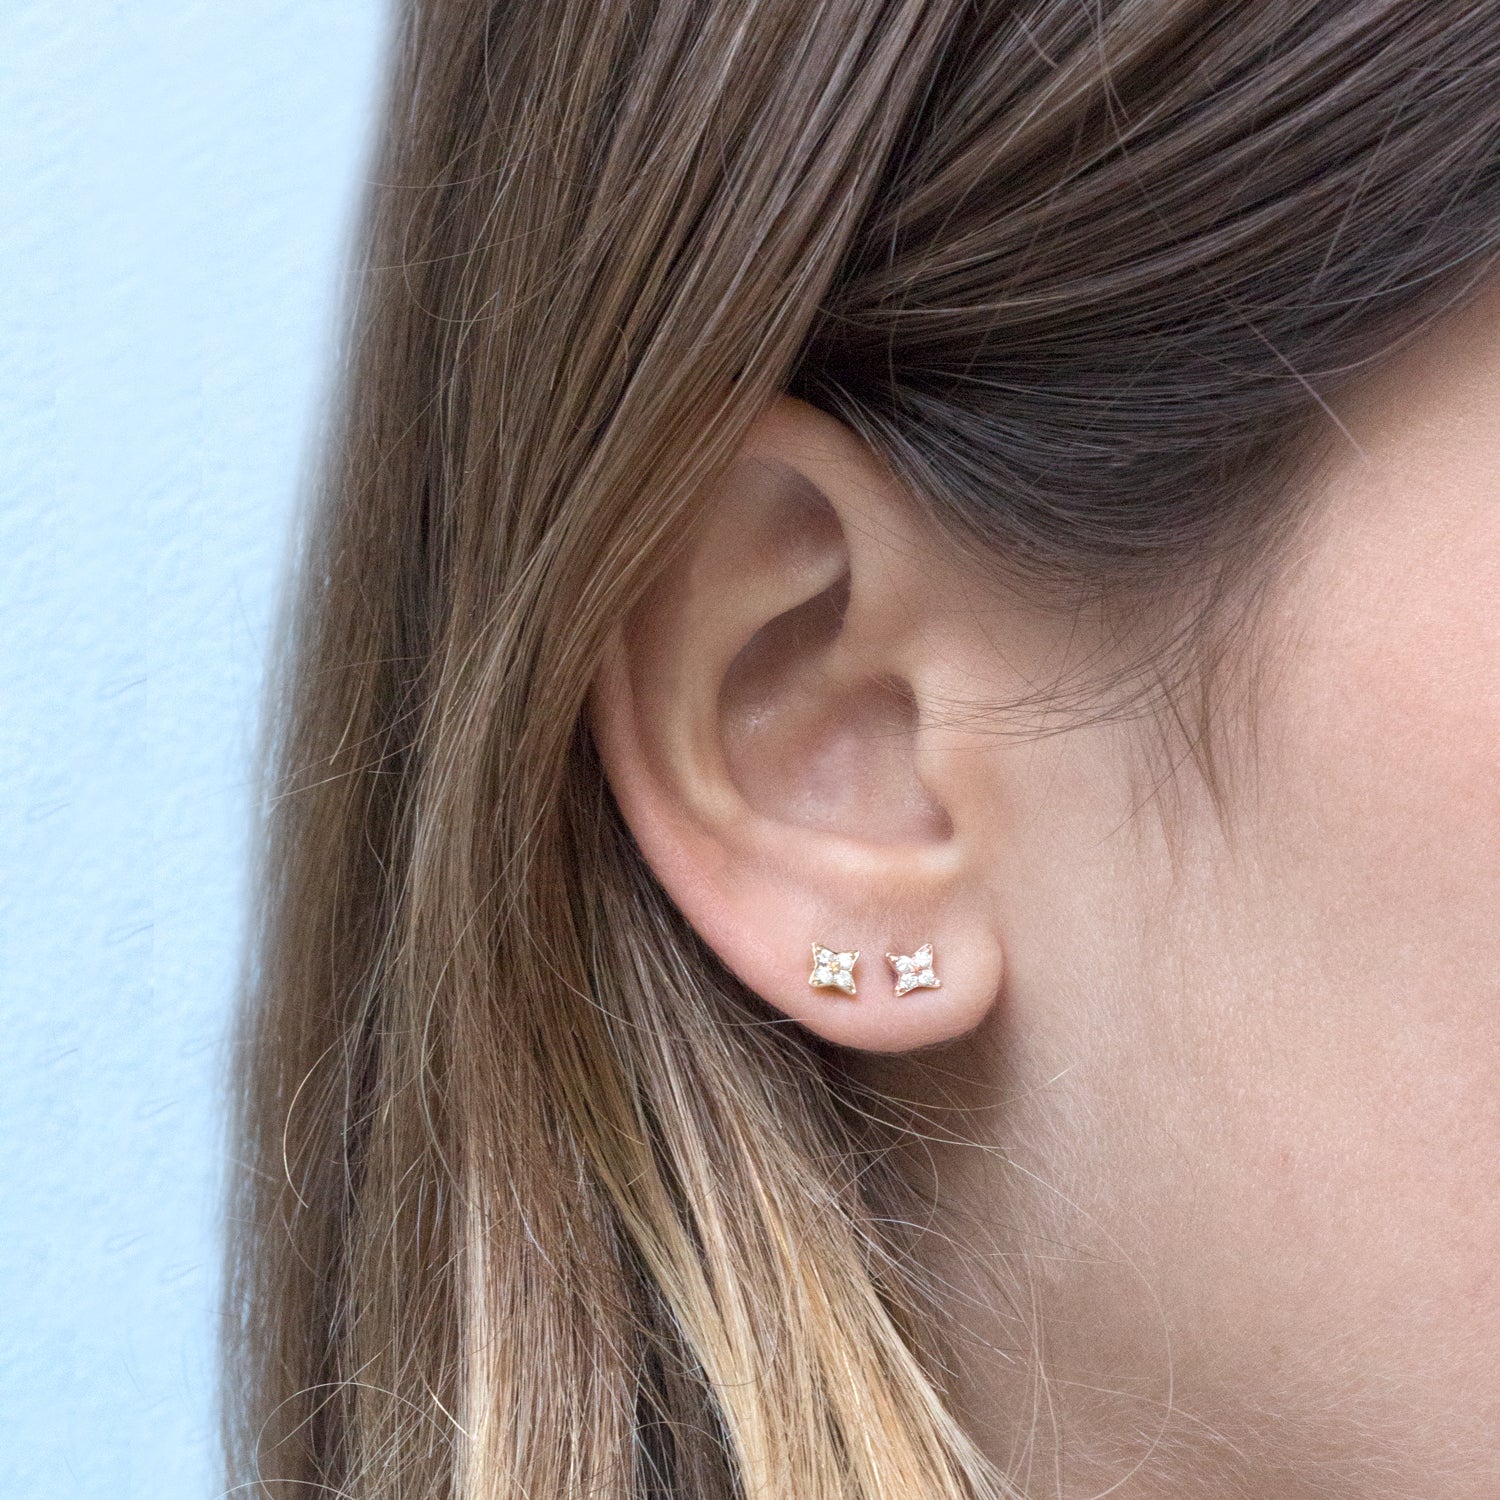 stud earrings star shaped white diamonds